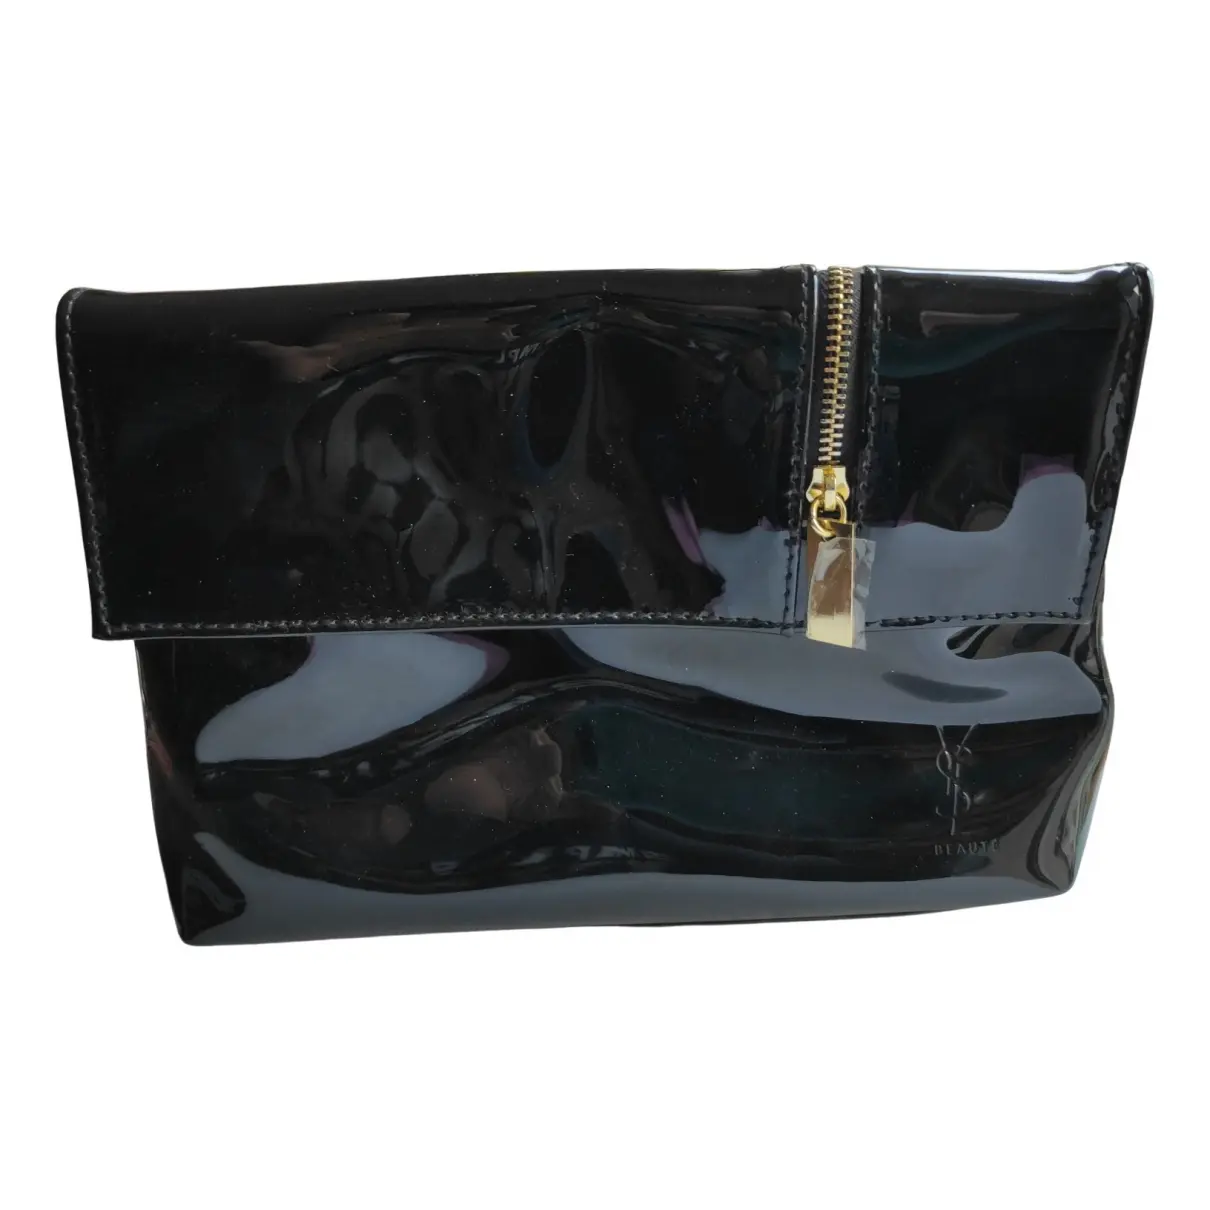 Vegan leather clutch bag Yves Saint Laurent